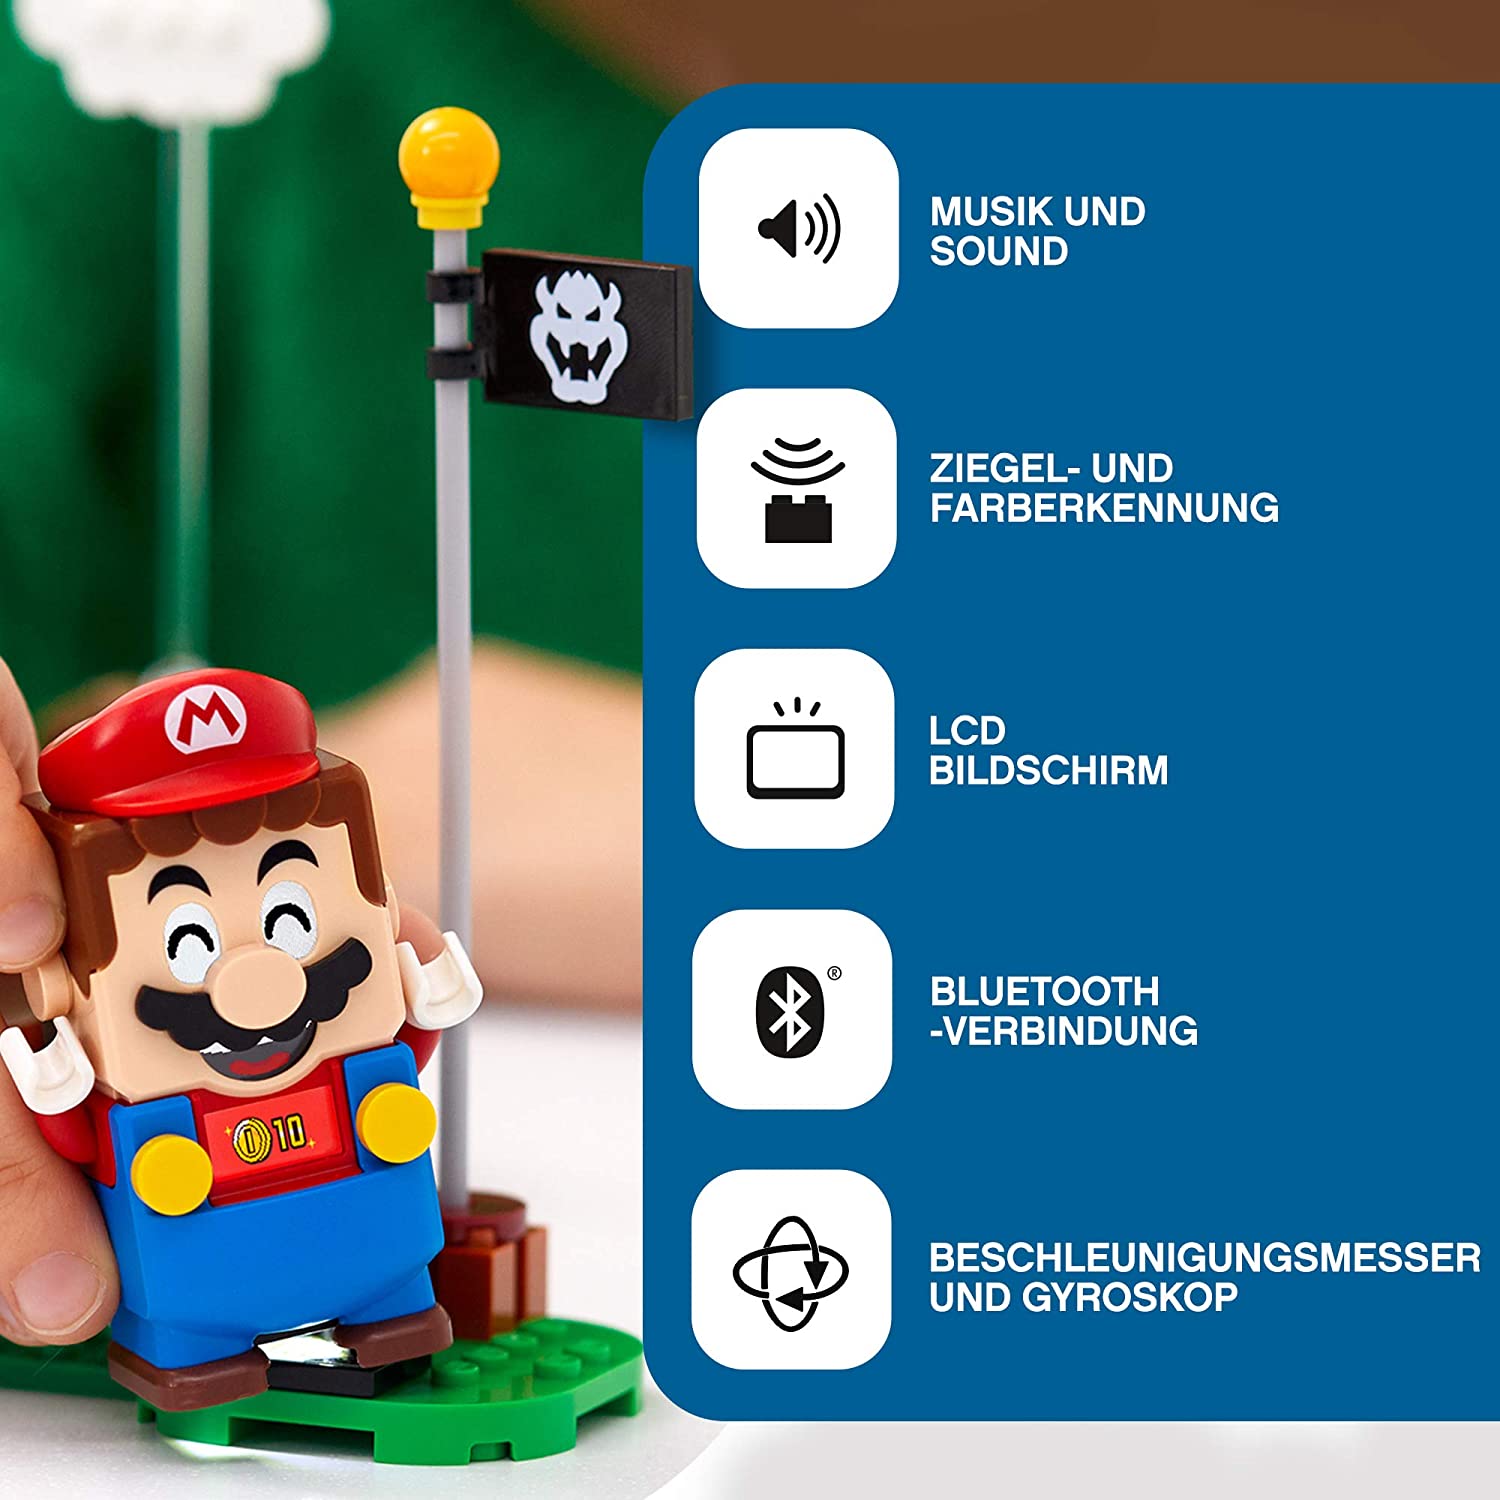 LEGO 71360 Super Mario Abenteuer mit Mario – Starterset, interaktive Figur